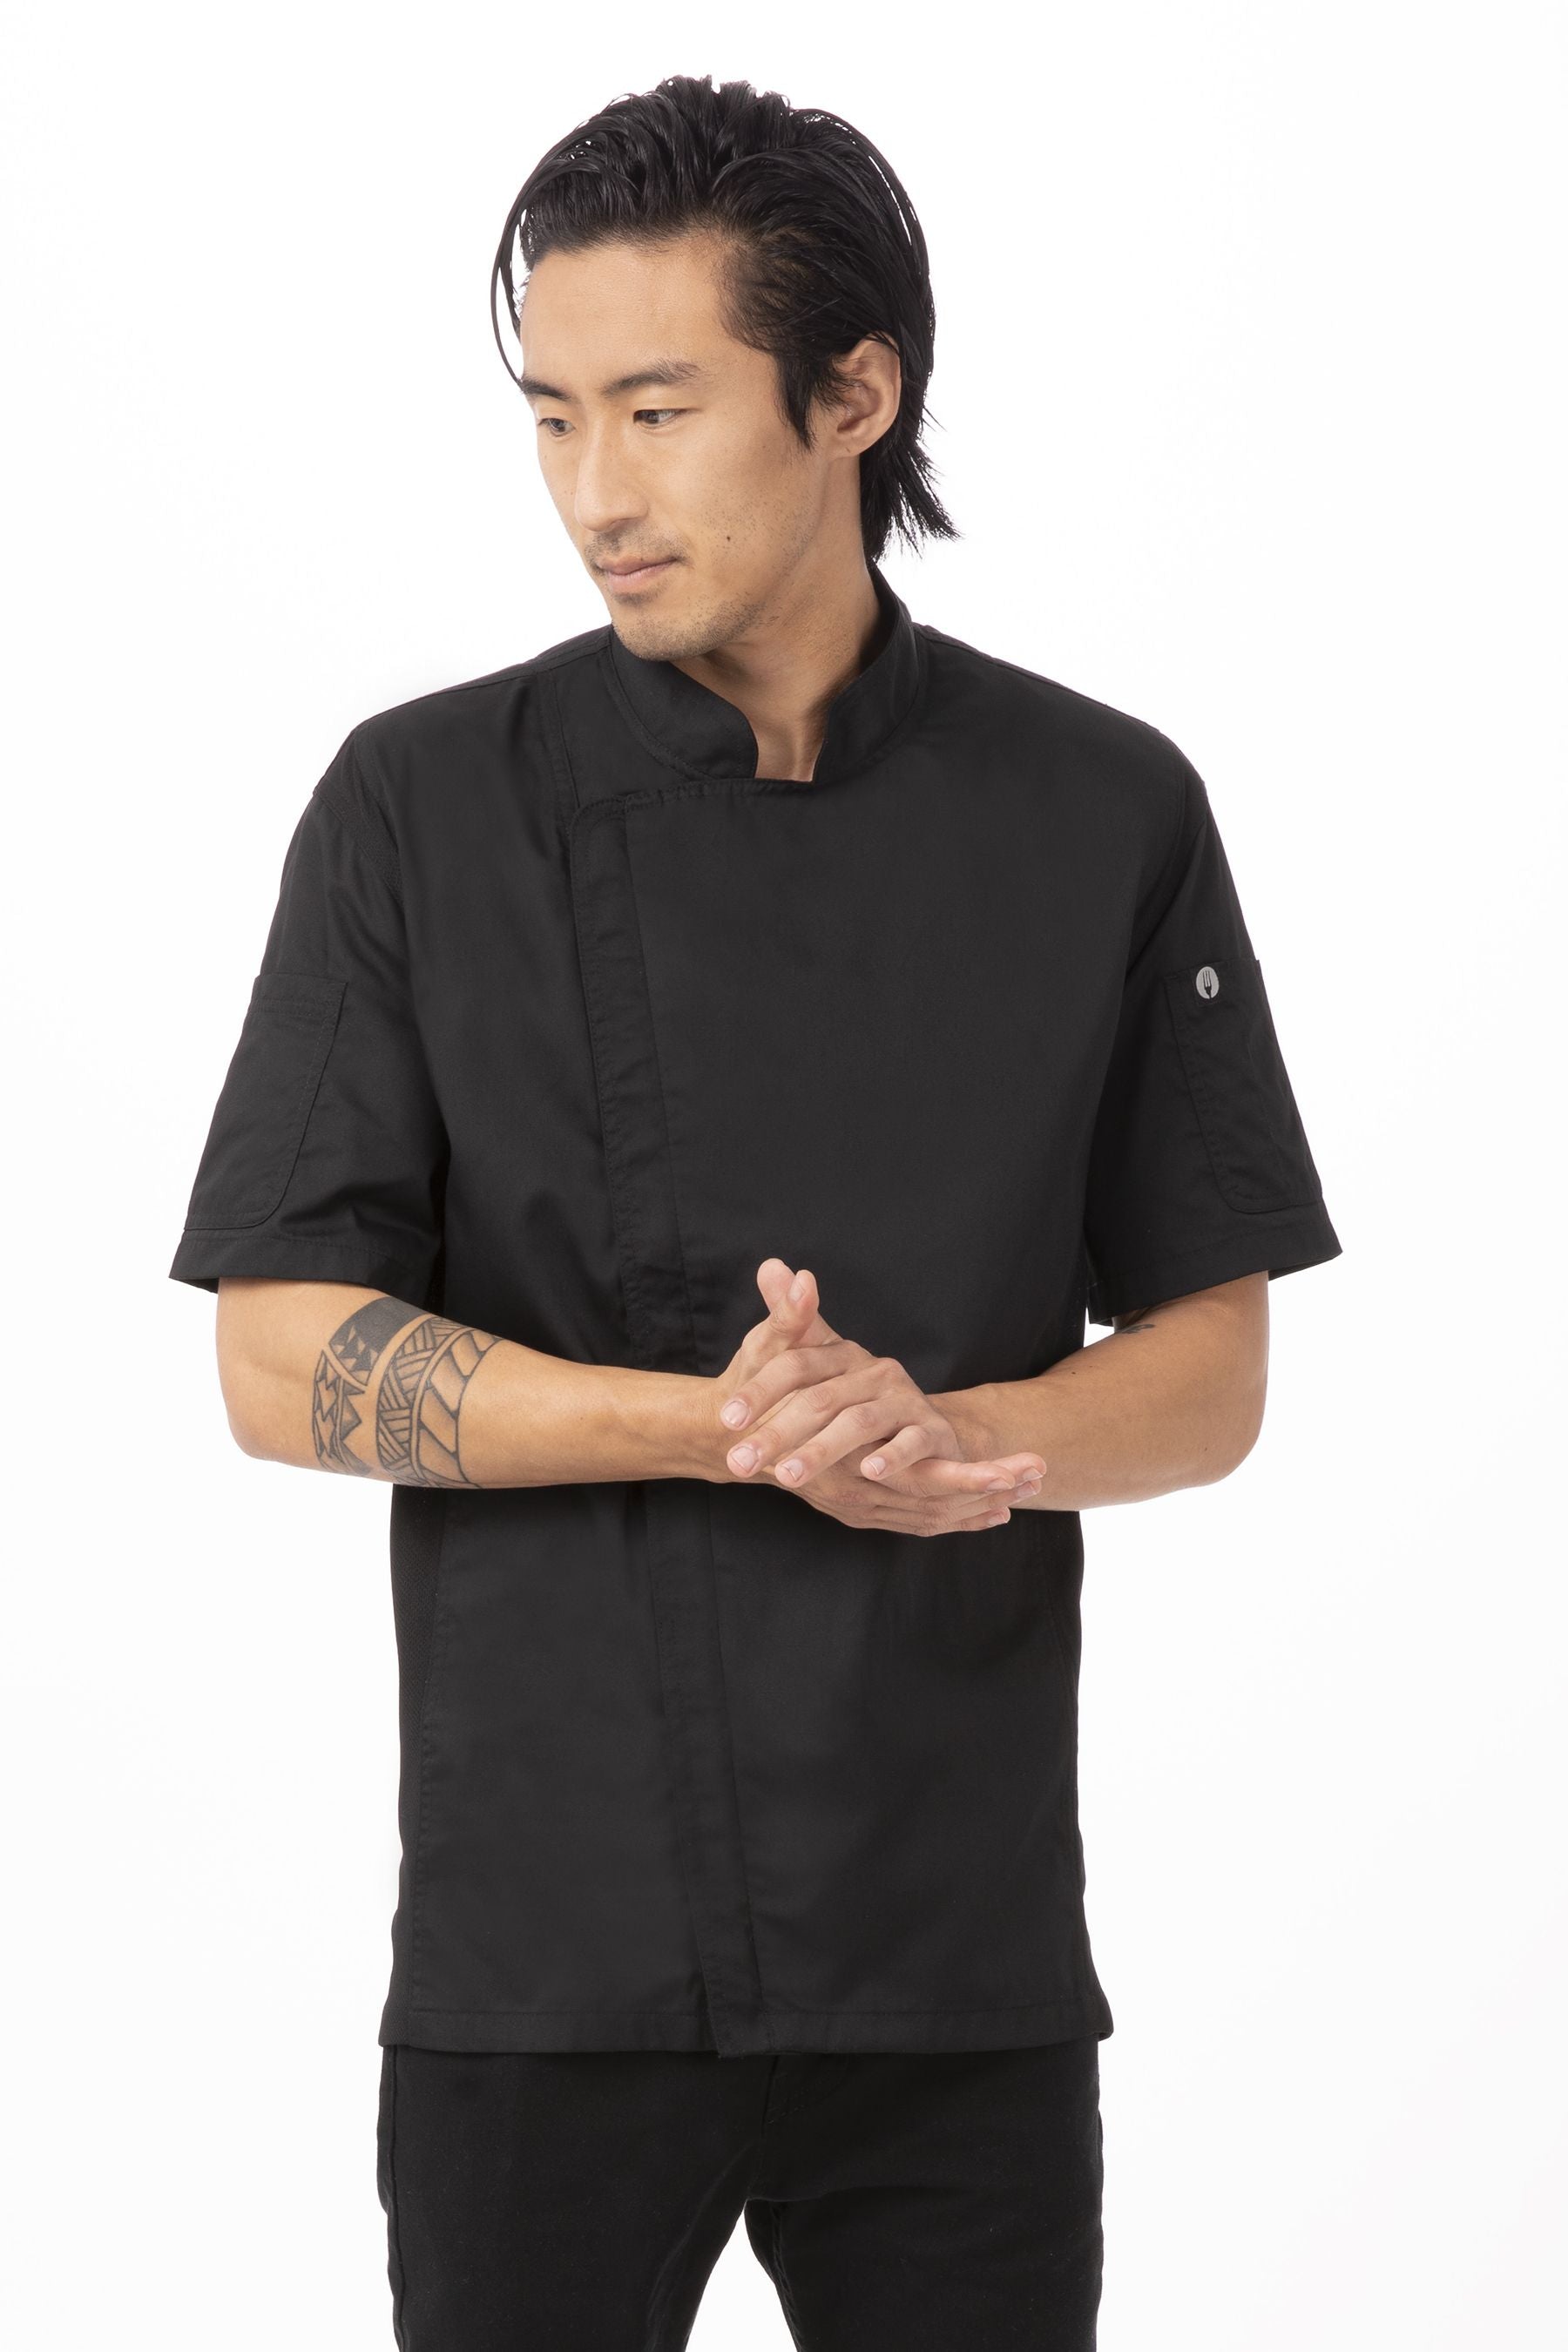 chef-works-springfield-chef-coat-black